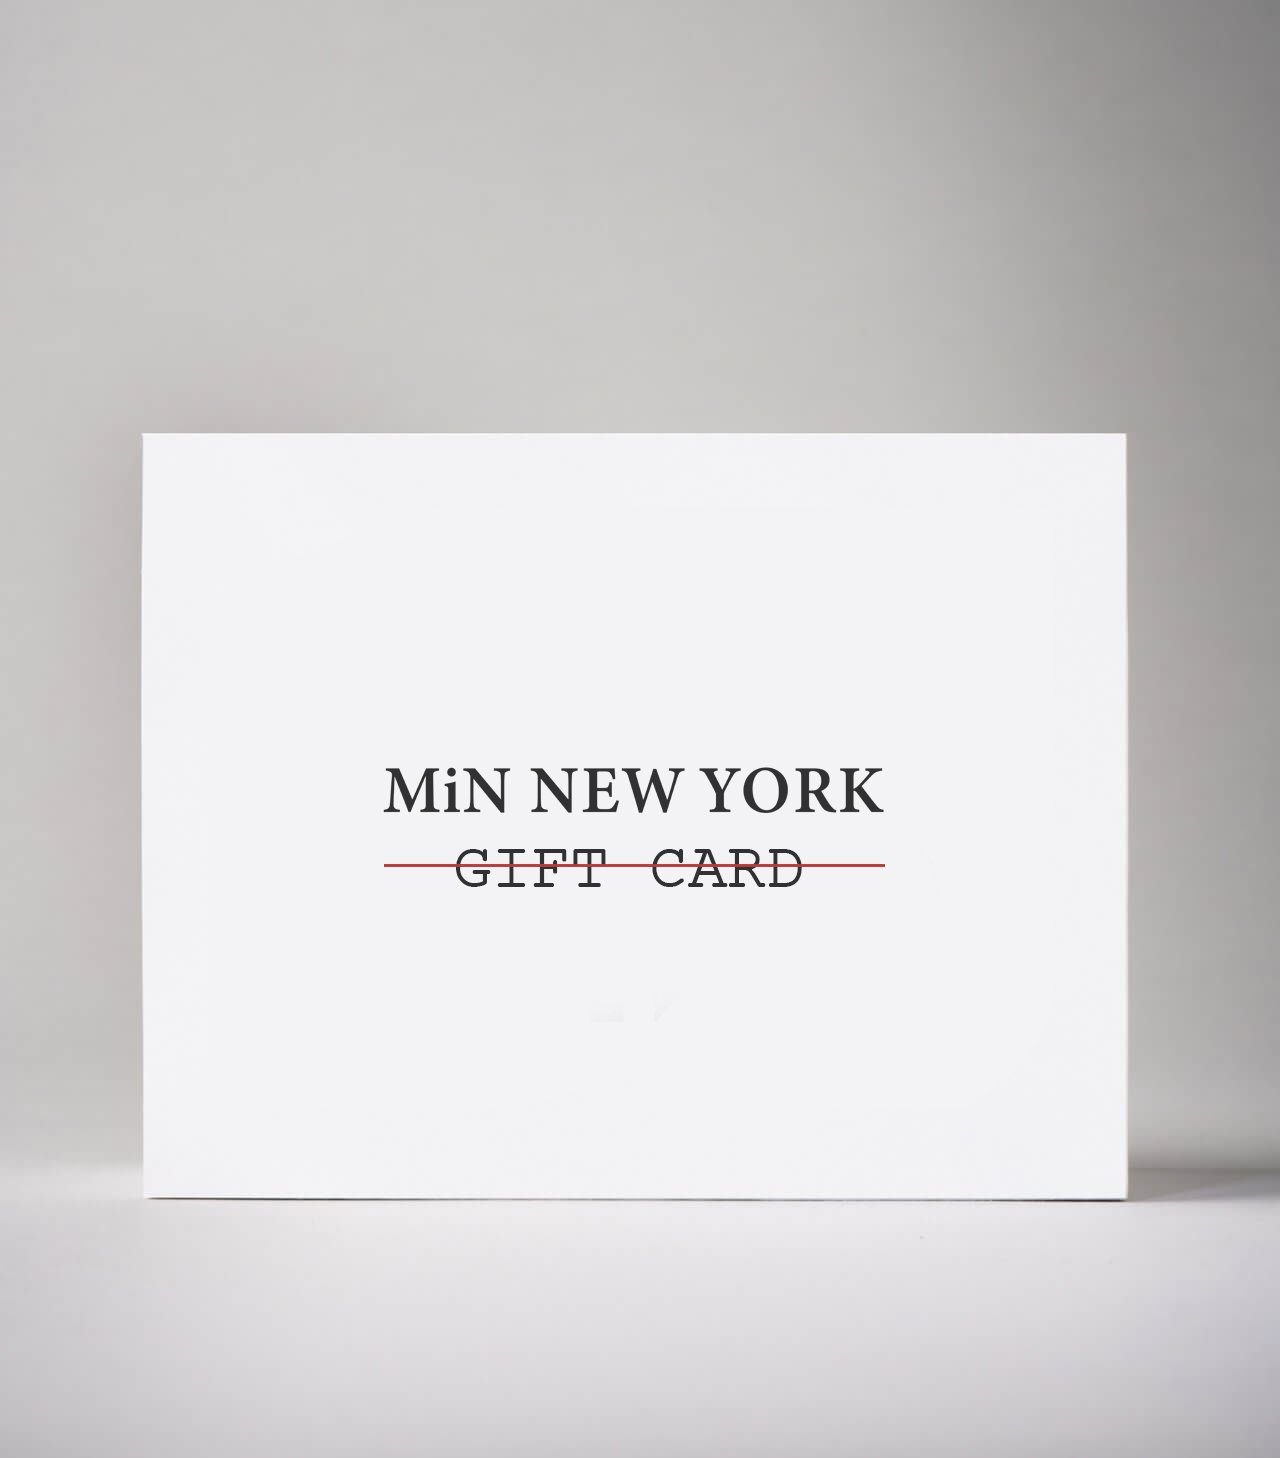 MiN NEW YORK GIFT CARD